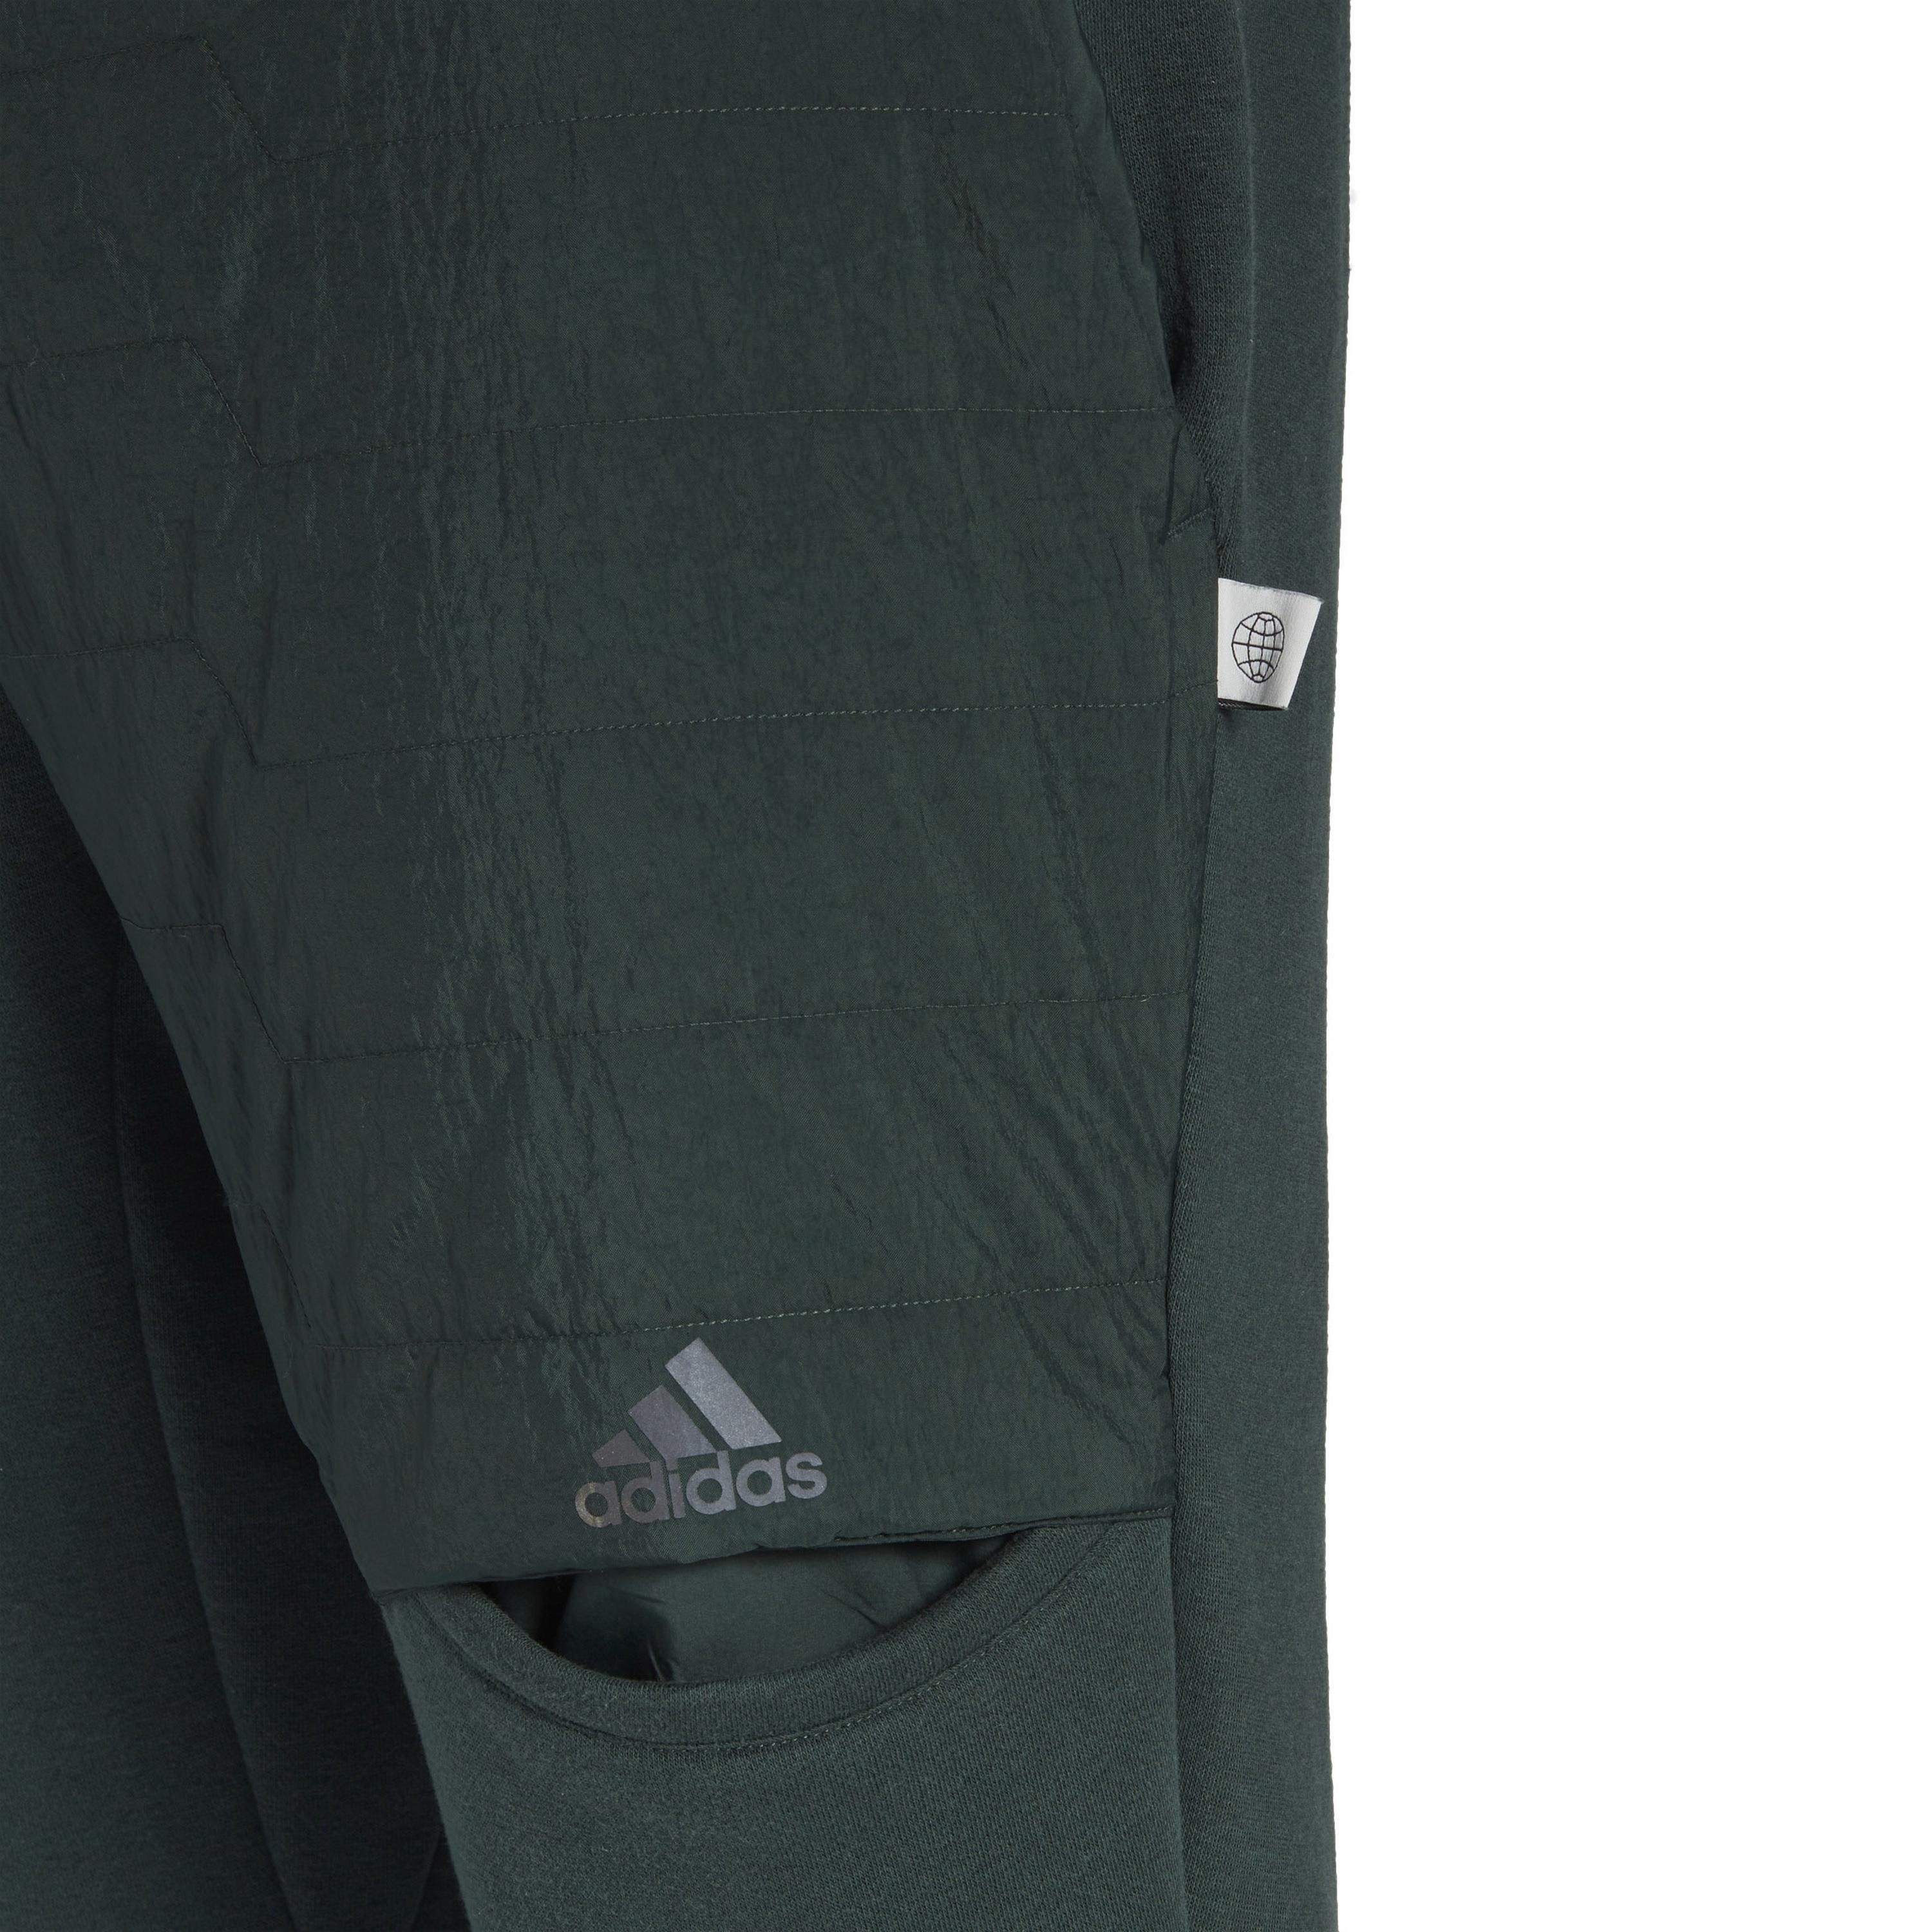 adidas Performance adidas shadow Sweathose green-pulse 4CMTE olive Sportswear